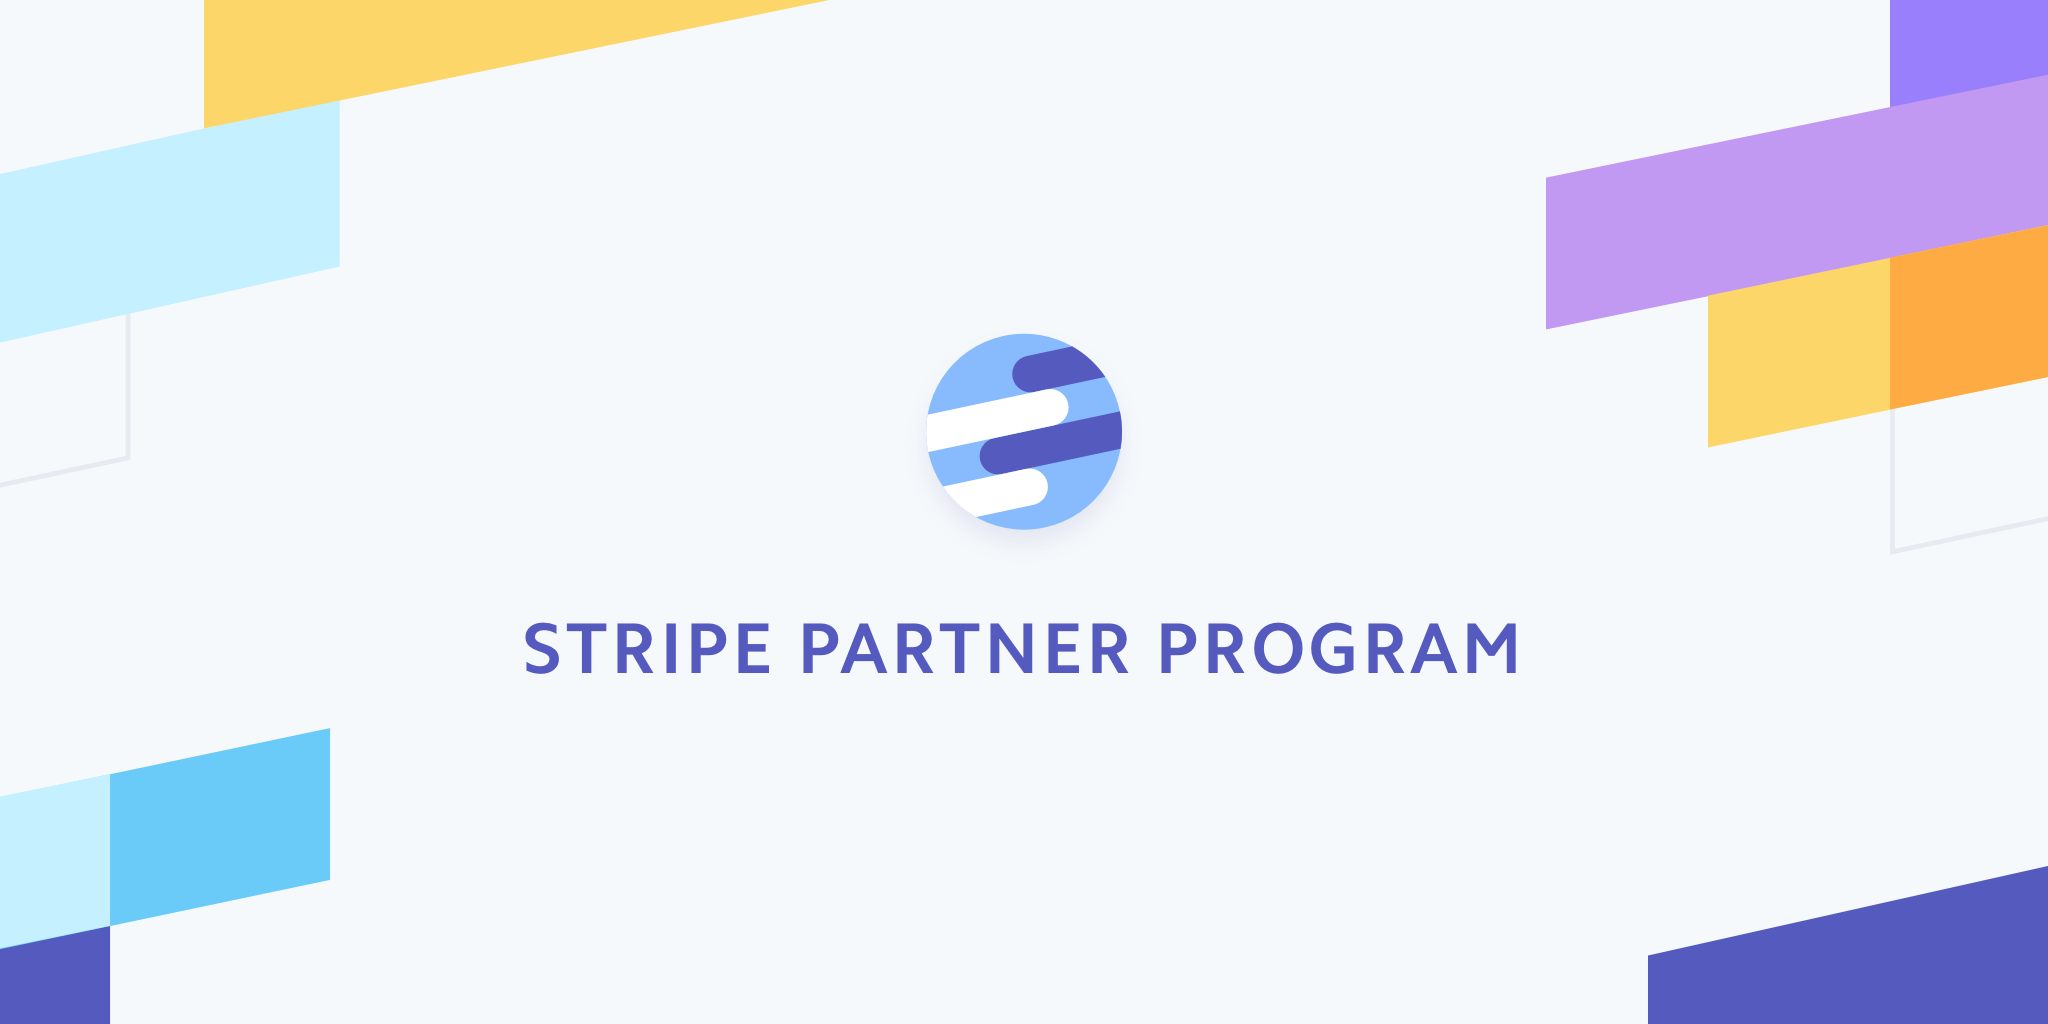 CashNotify joins the new Stripe Partner Program